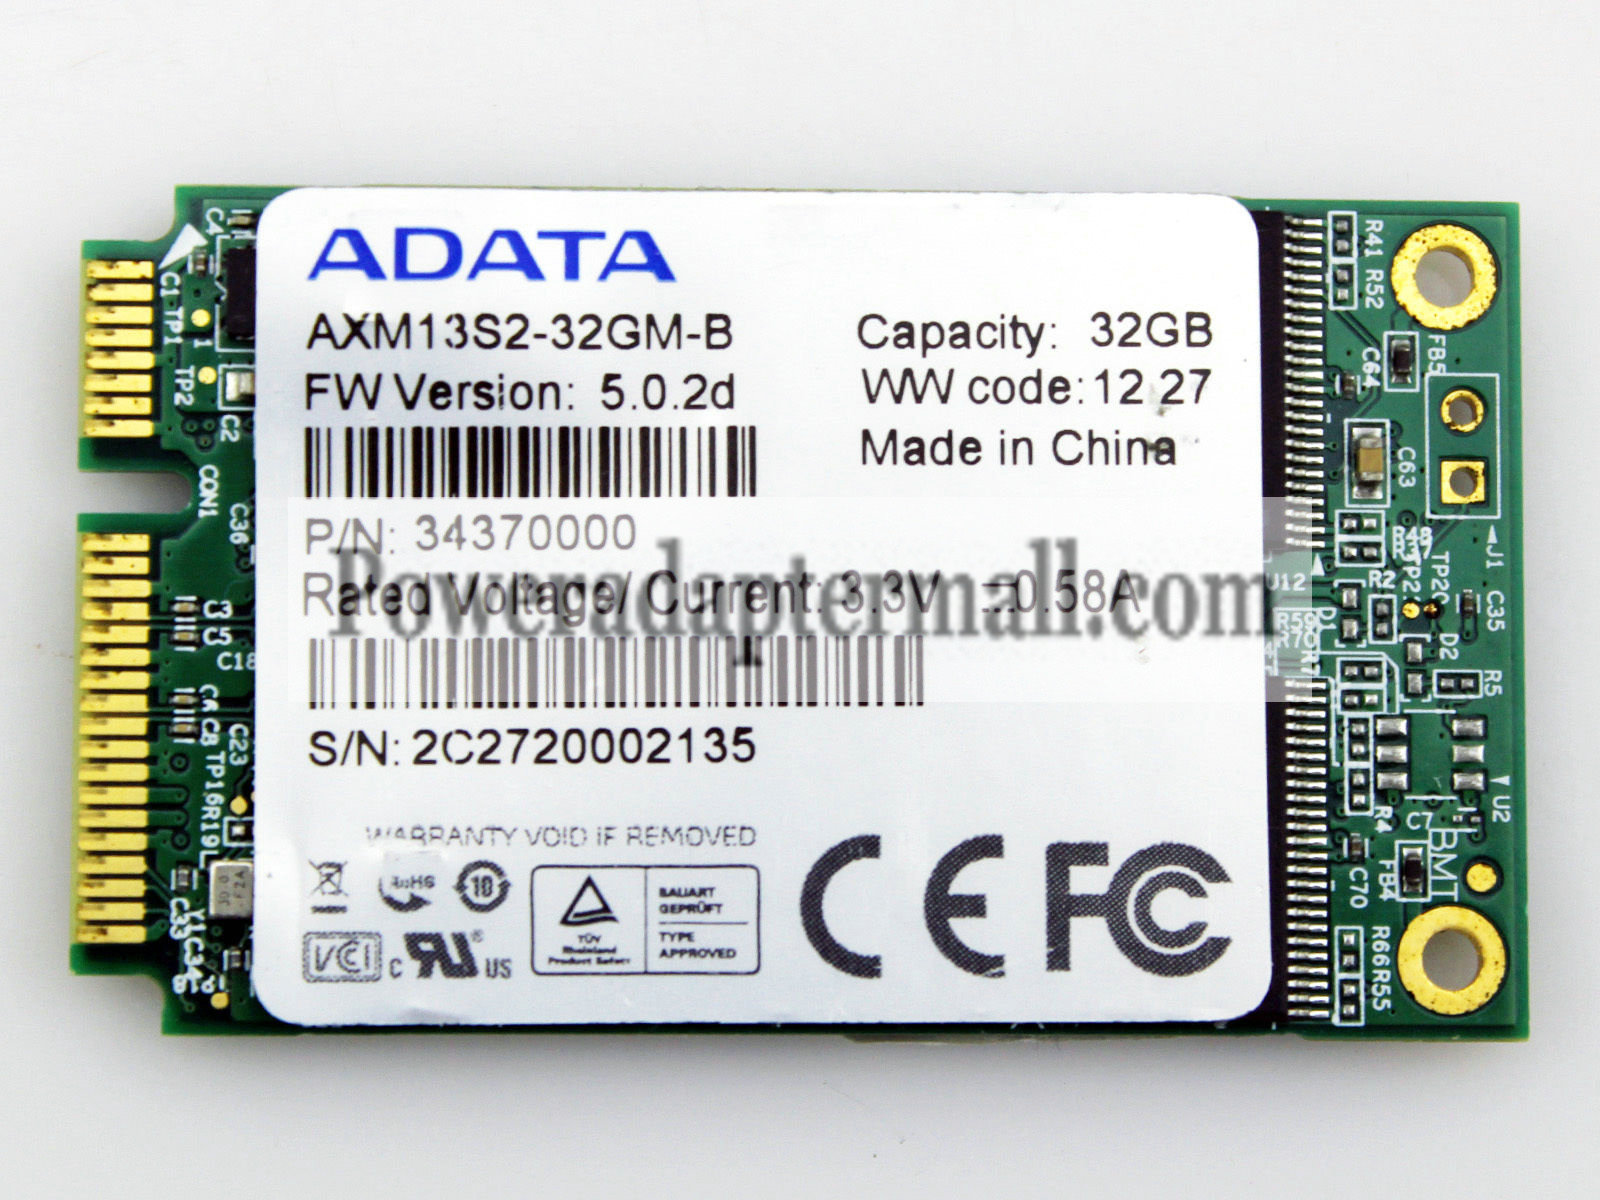 Adata 32GB AXM13S2-32GM-B MINI PCI-E SSD Solid State Drive CARD